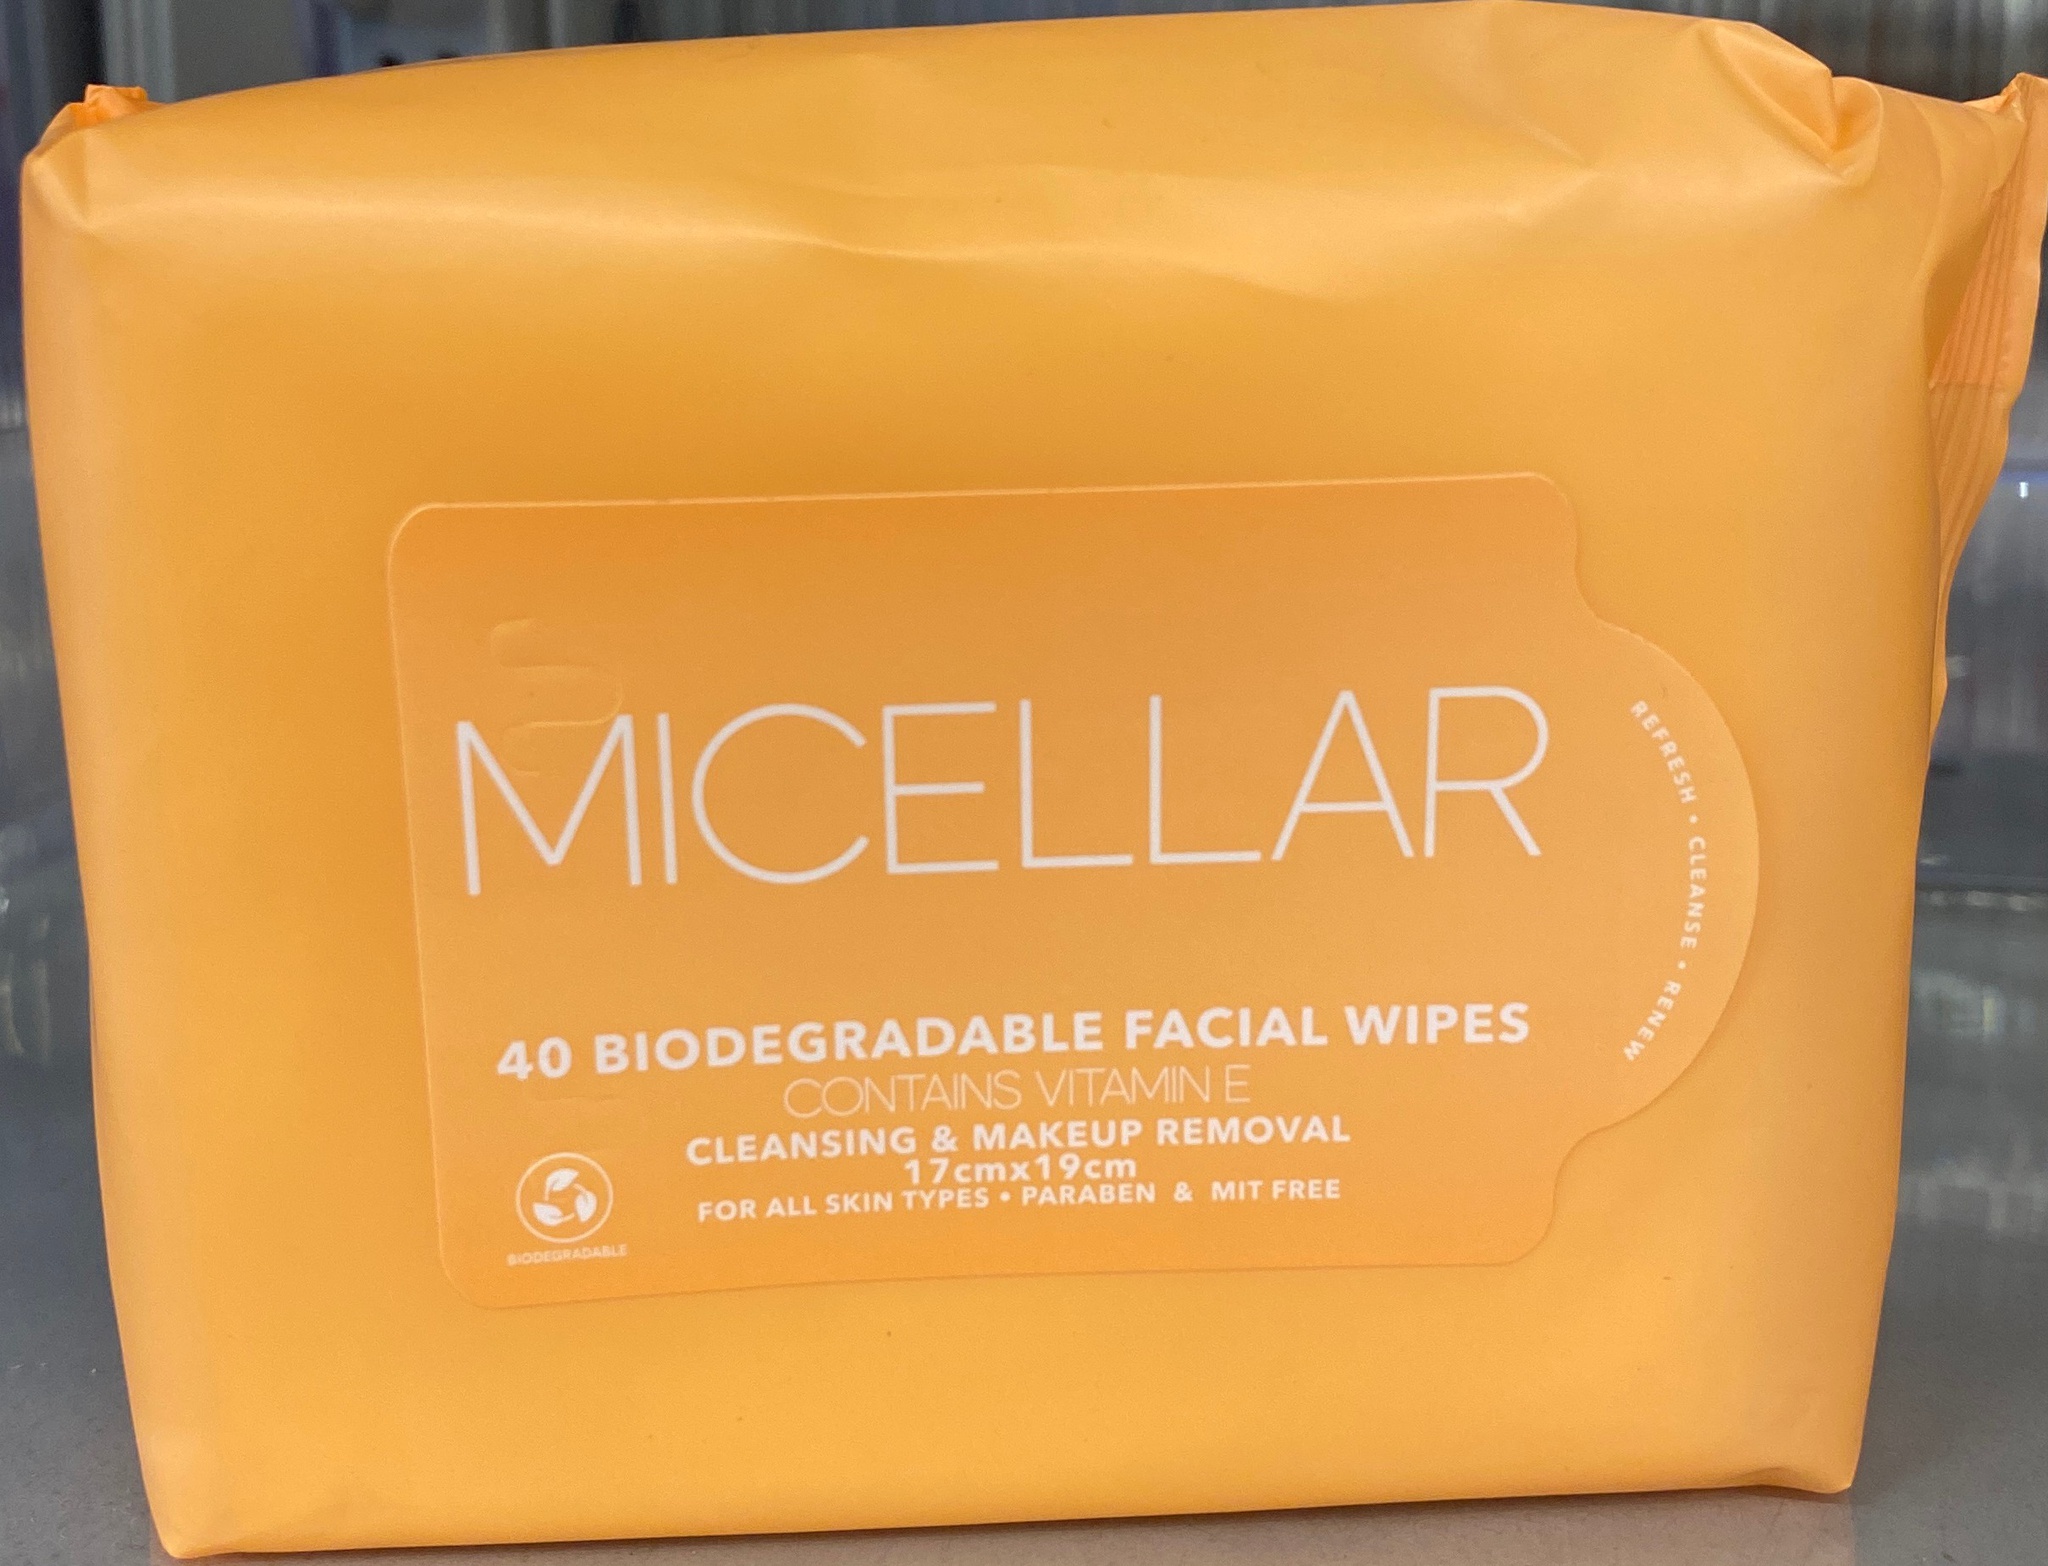 anko Micellar Biodegradable Facial Wipes